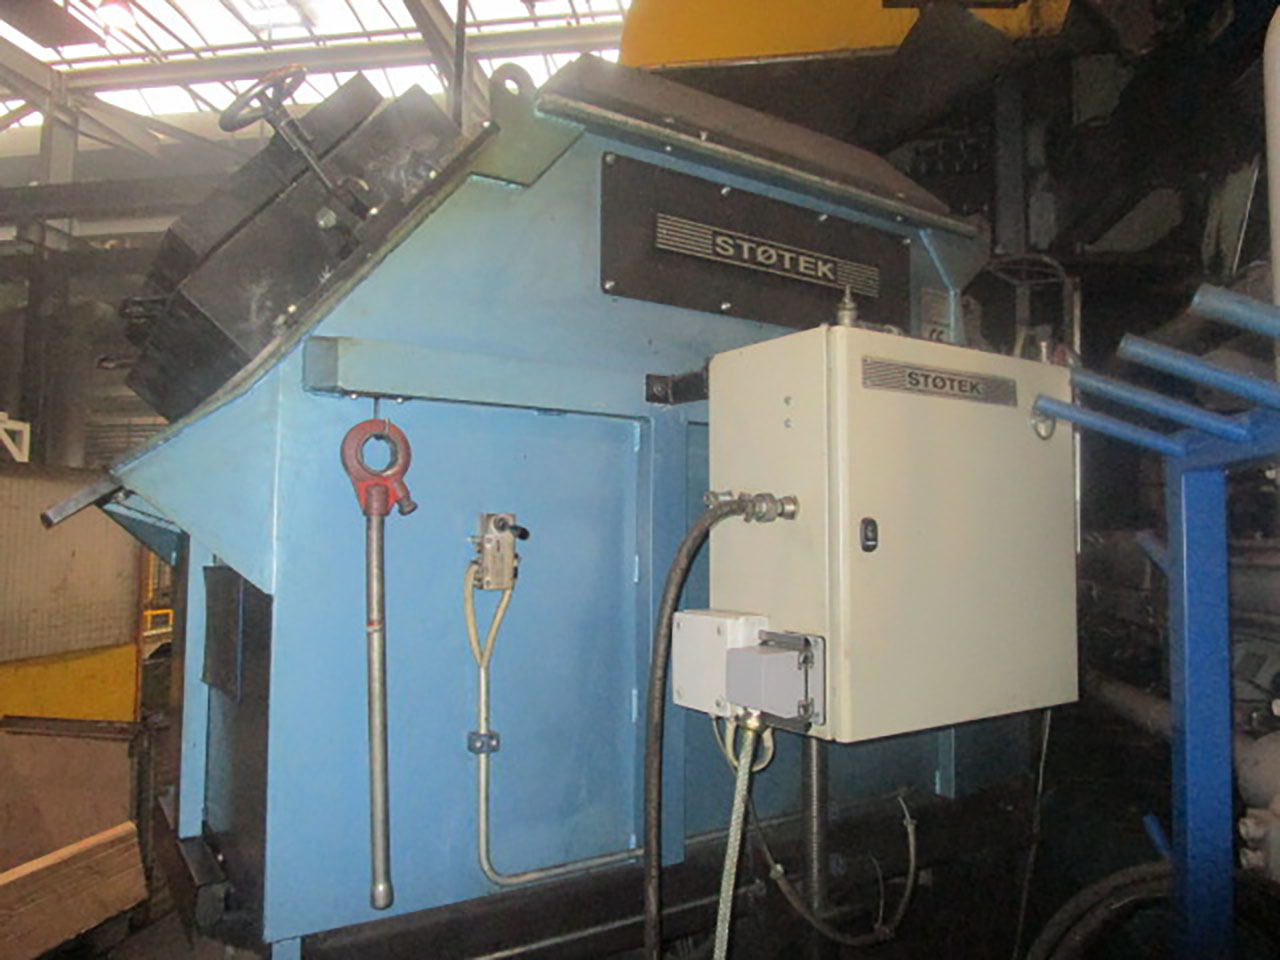 Stotek Dosotherm 1210 dosing furnace O1654, used